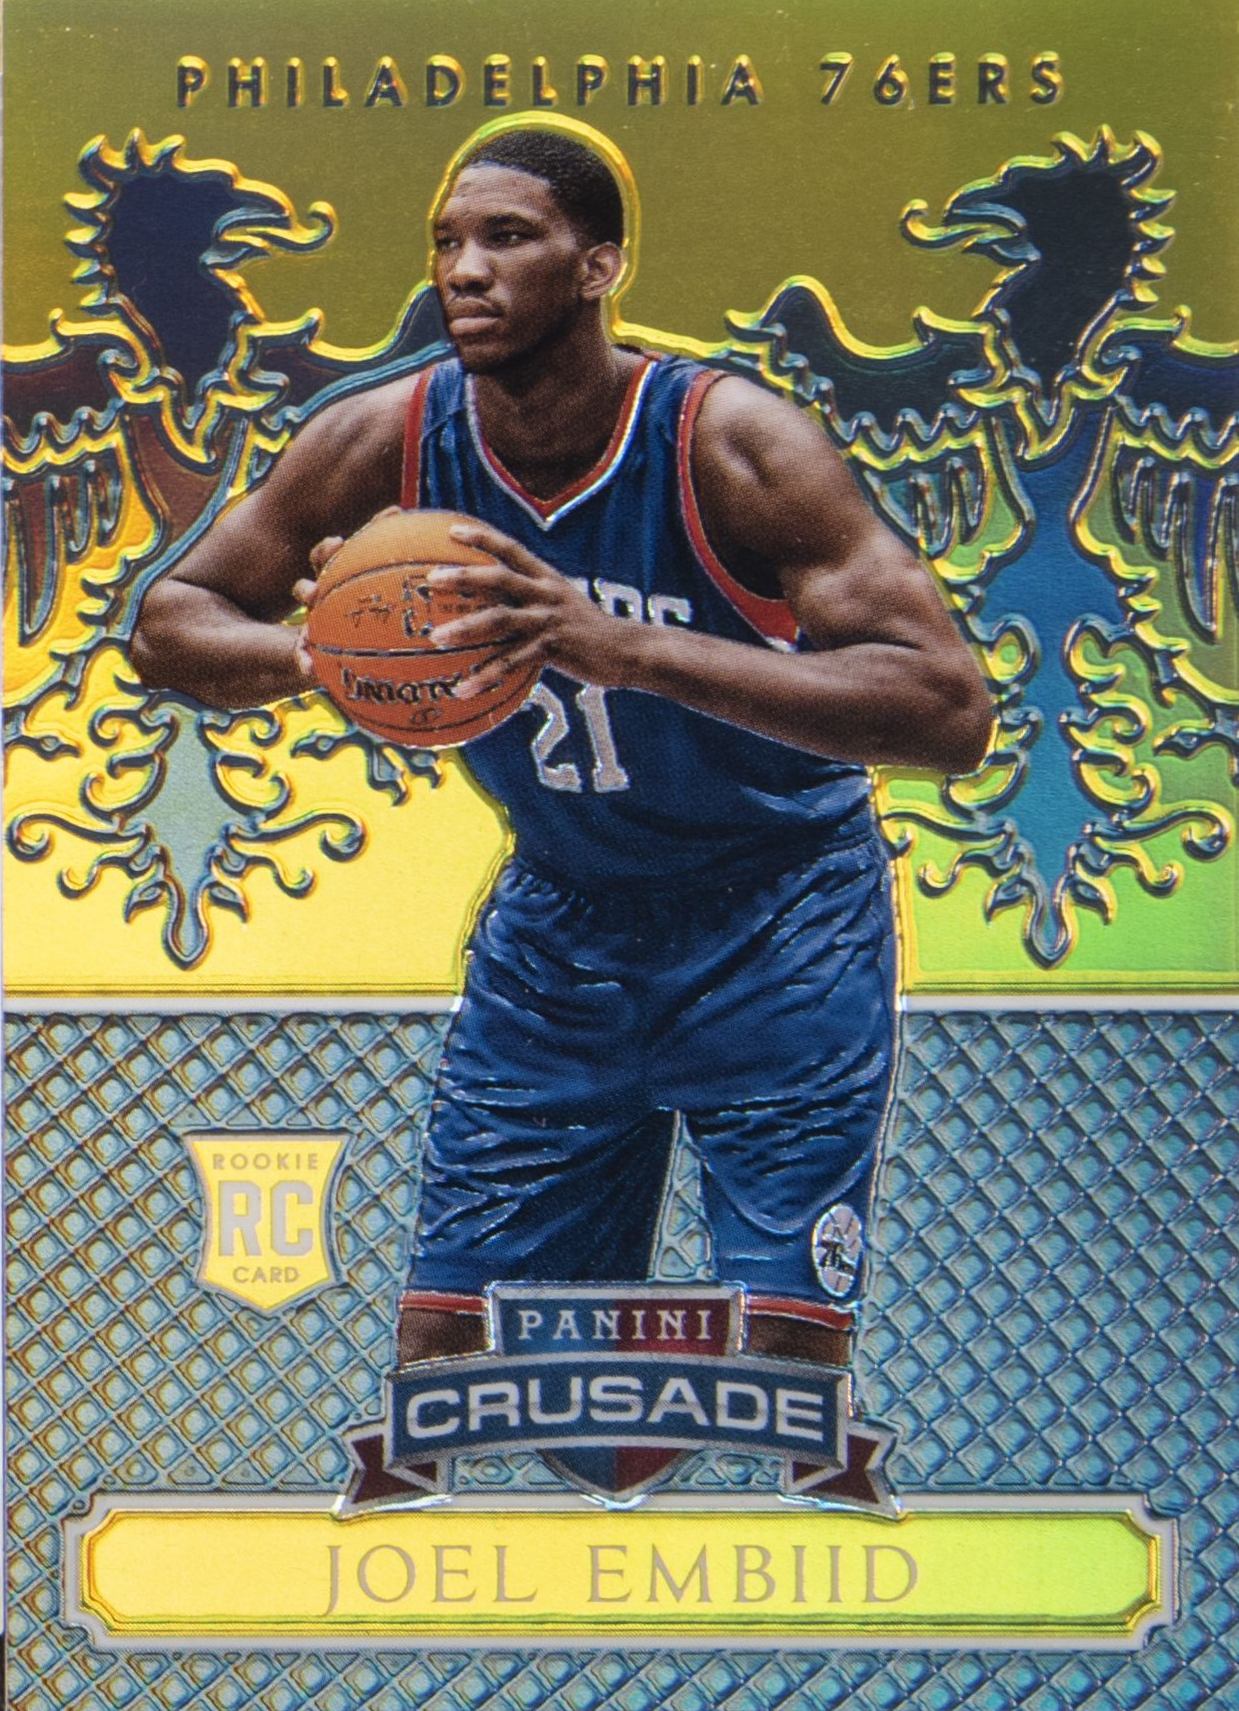 2014 Panini Excalibur Crusade Joel Embiid #173 Basketball Card